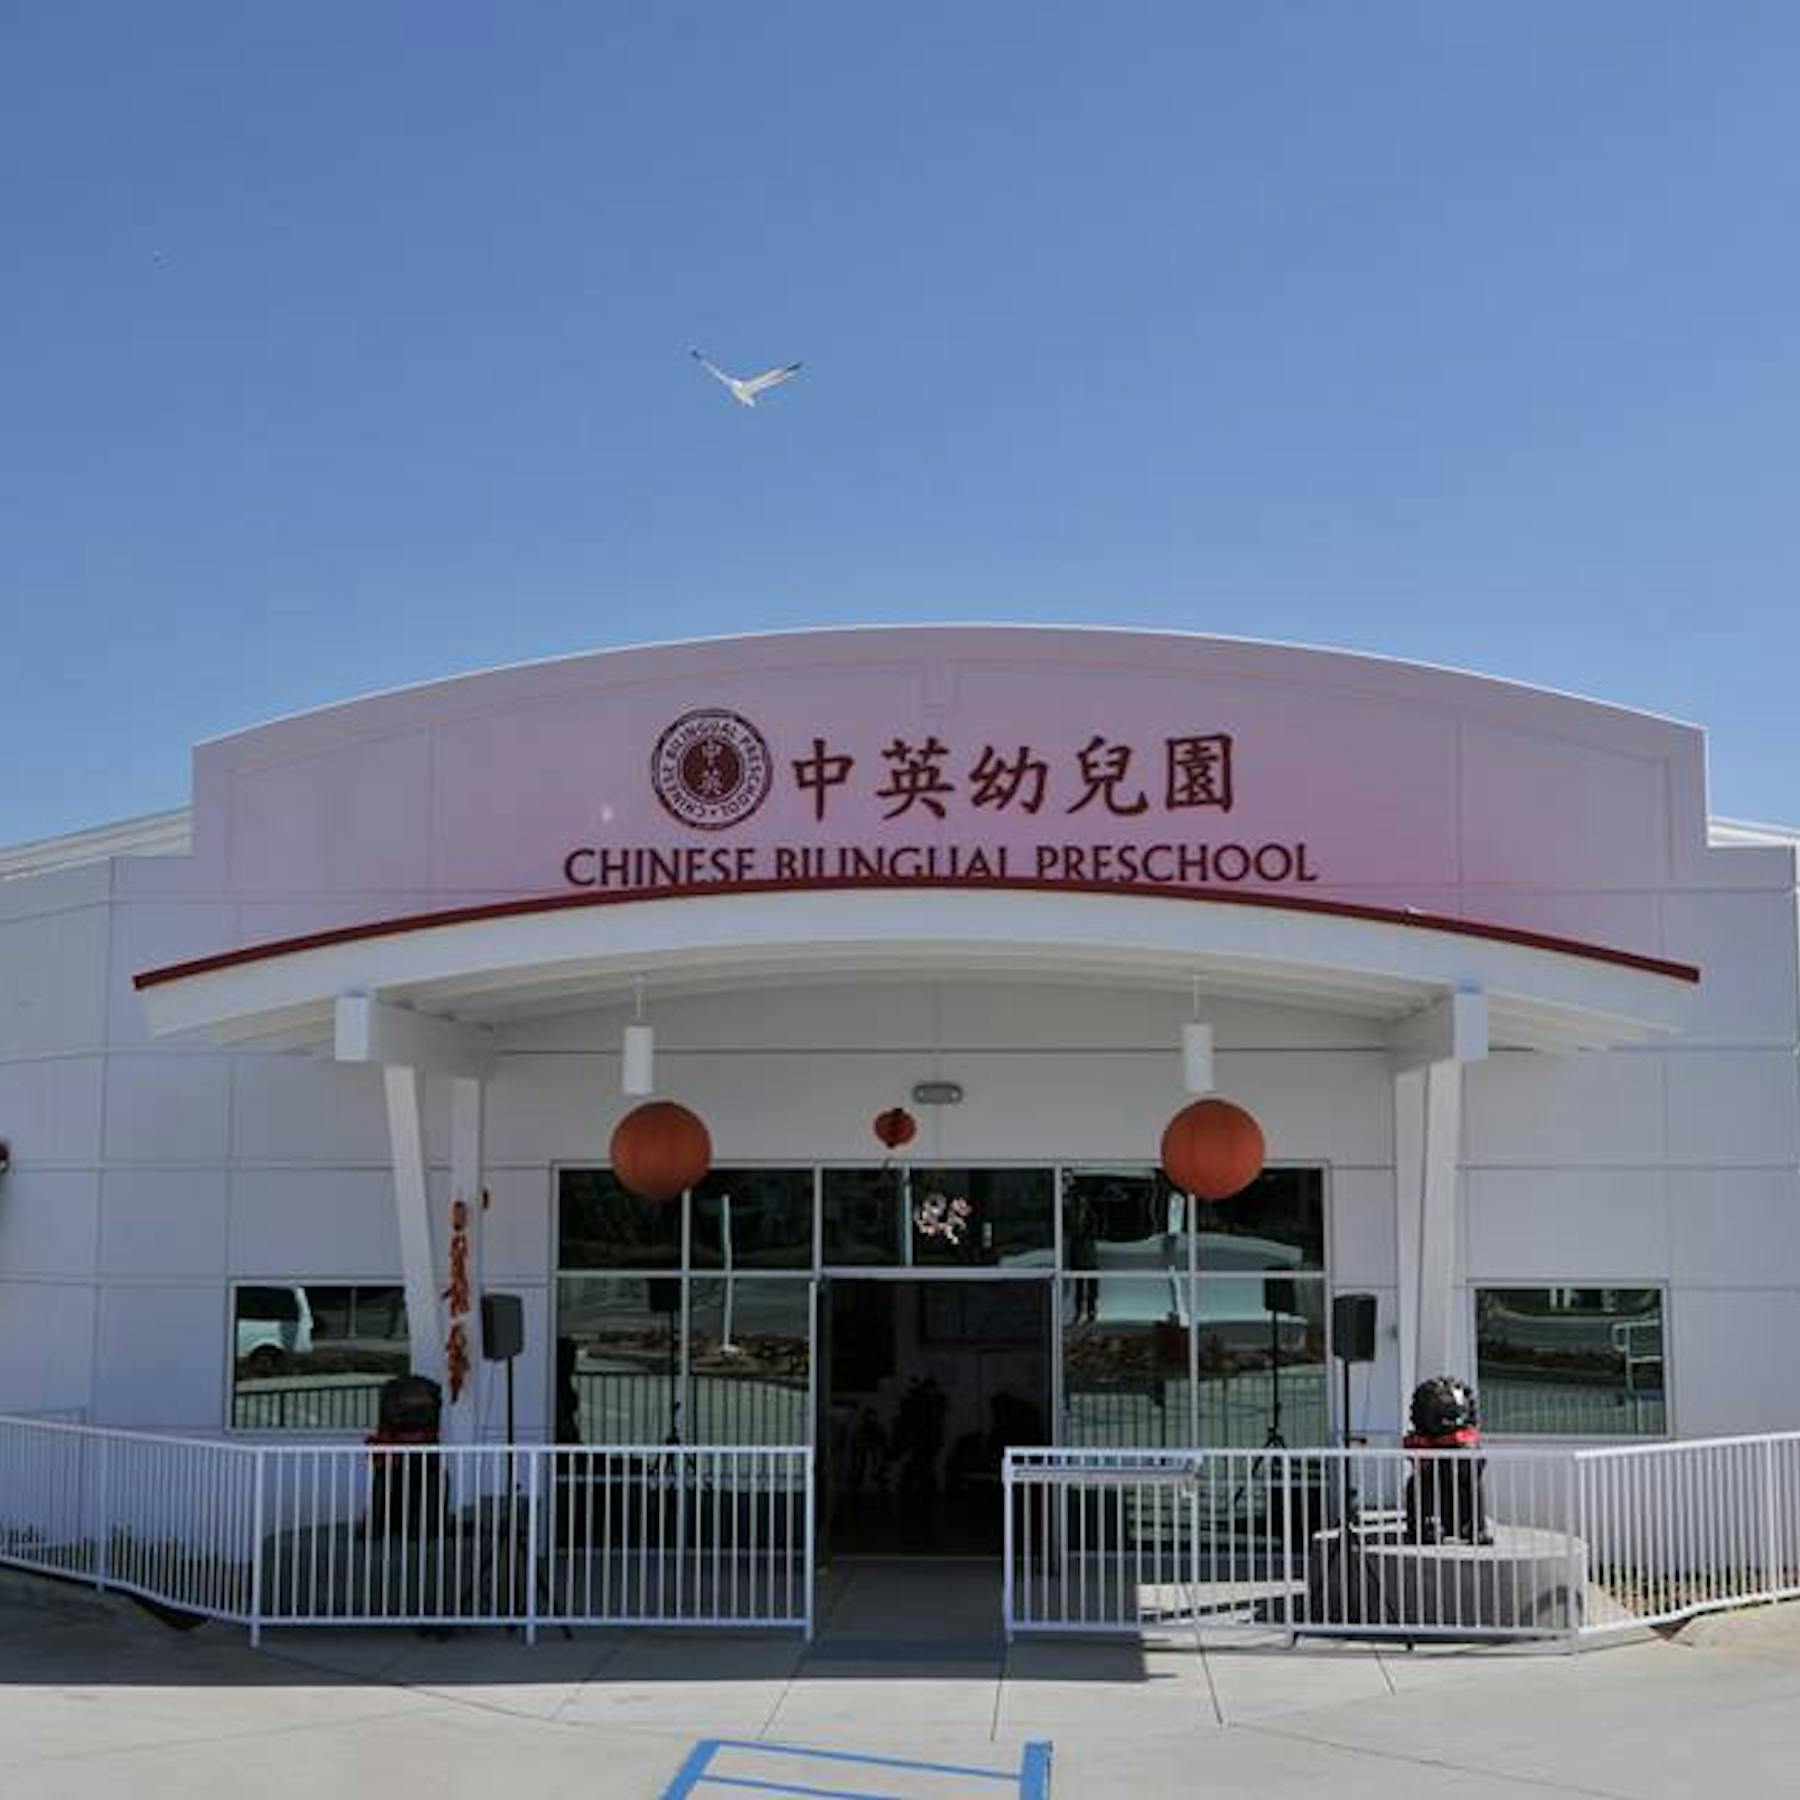 Chinese Bilingual Preschool - Preschool in San Diego, CA - Winnie